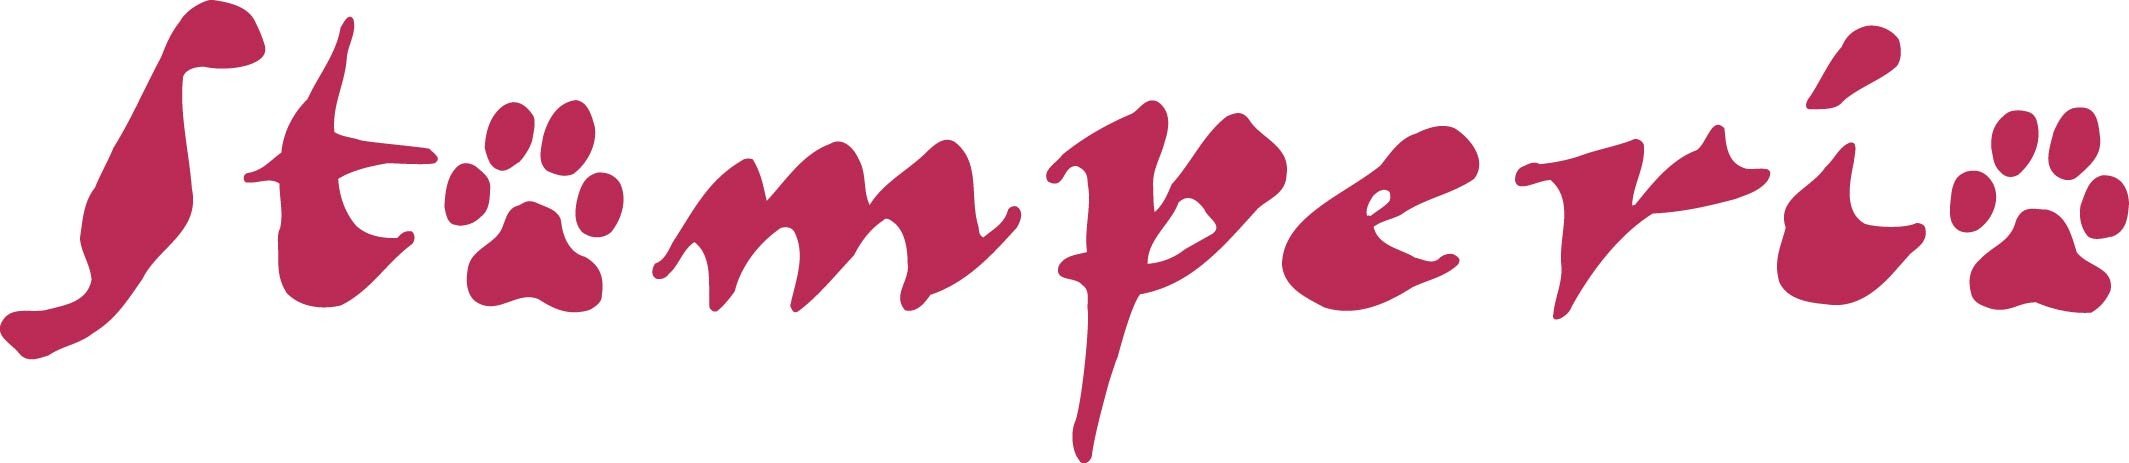 stamperia logo